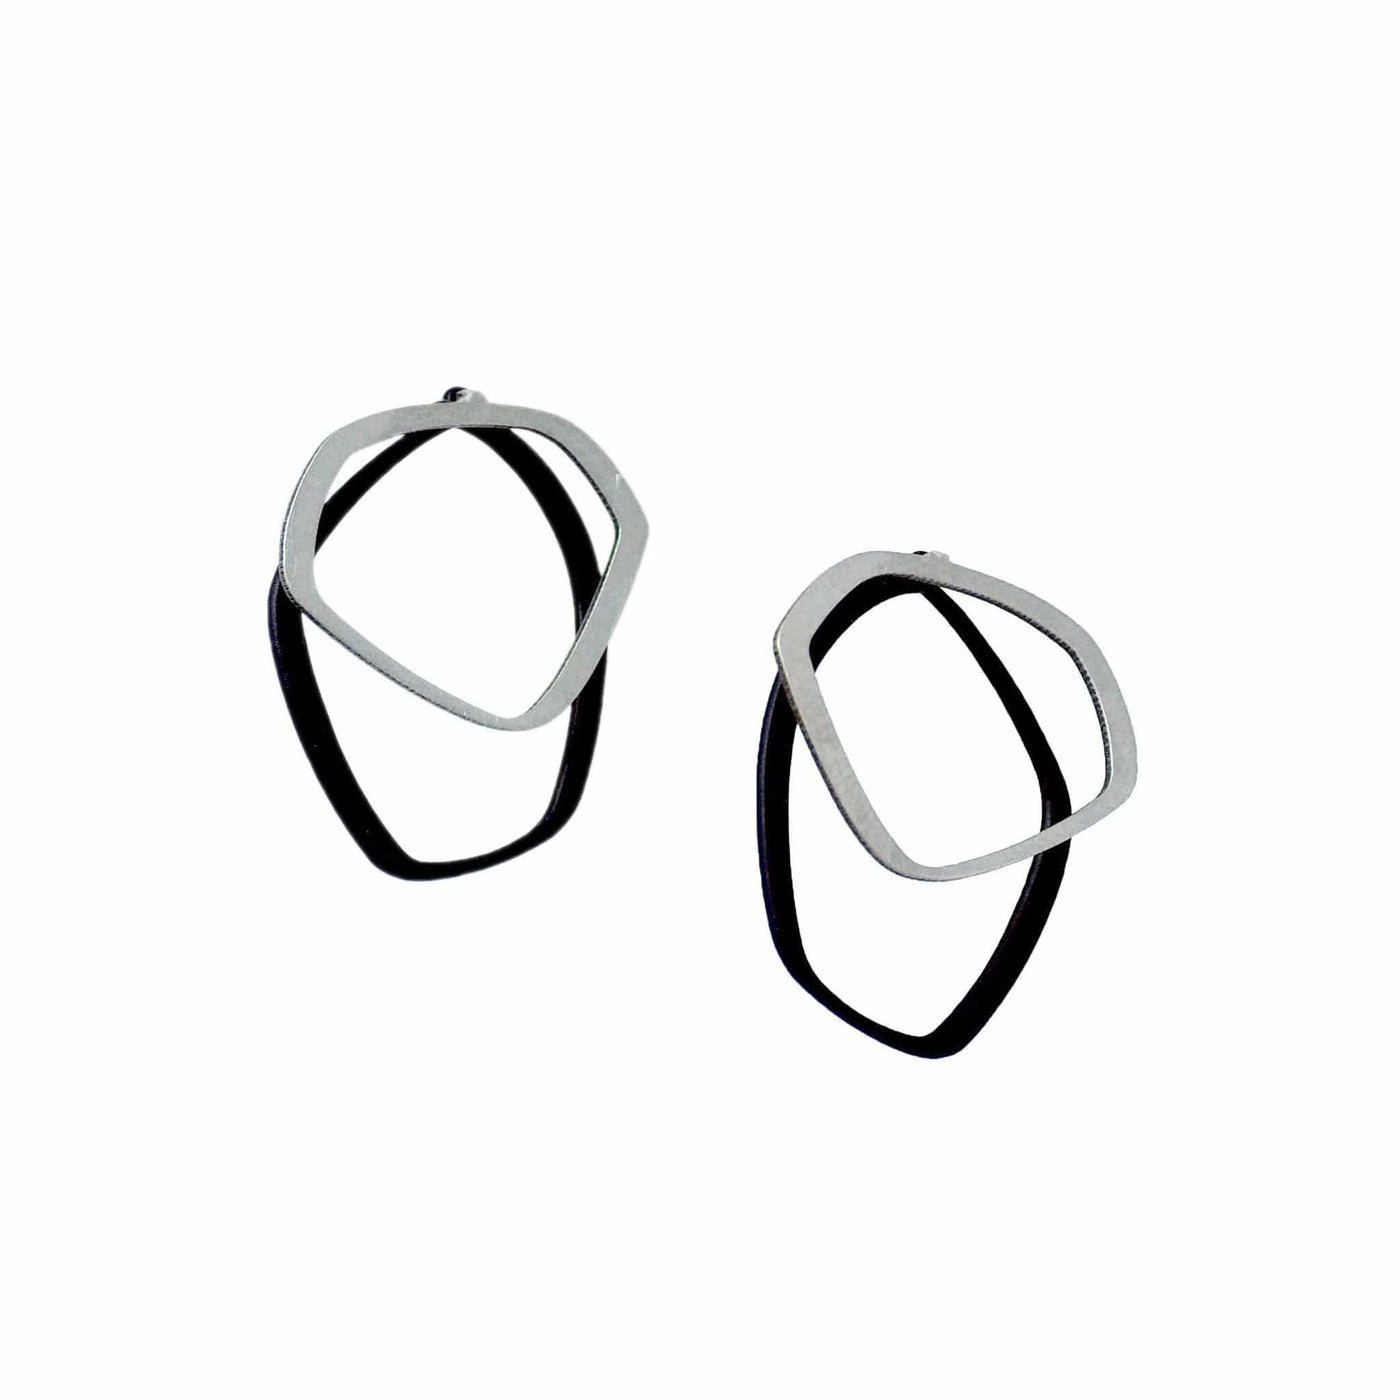 X2 Small Stud Earrings - Raw/ Black - inSync design